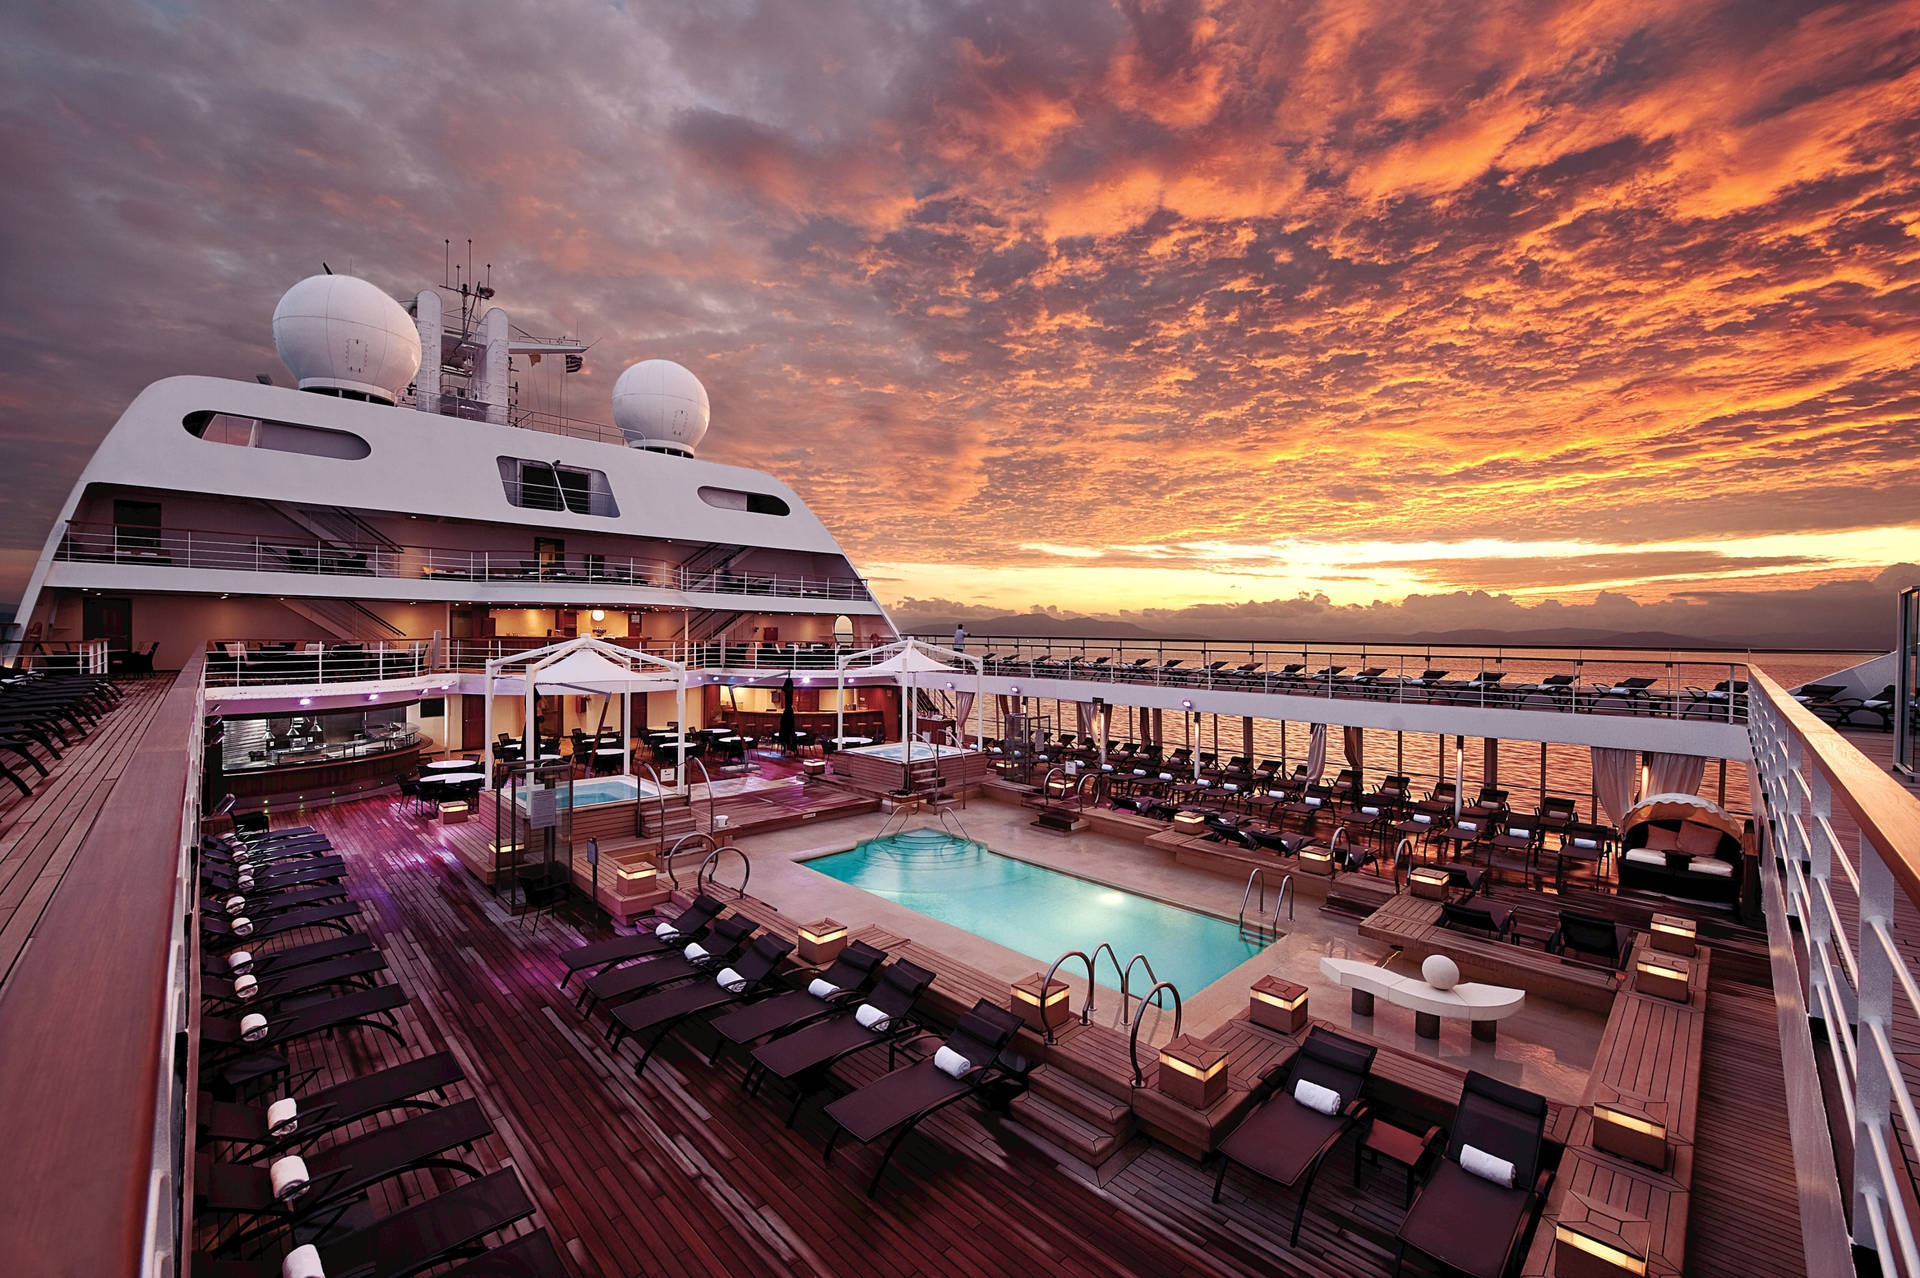 Aesthetic Cruise Ship Sunset Wallpaper